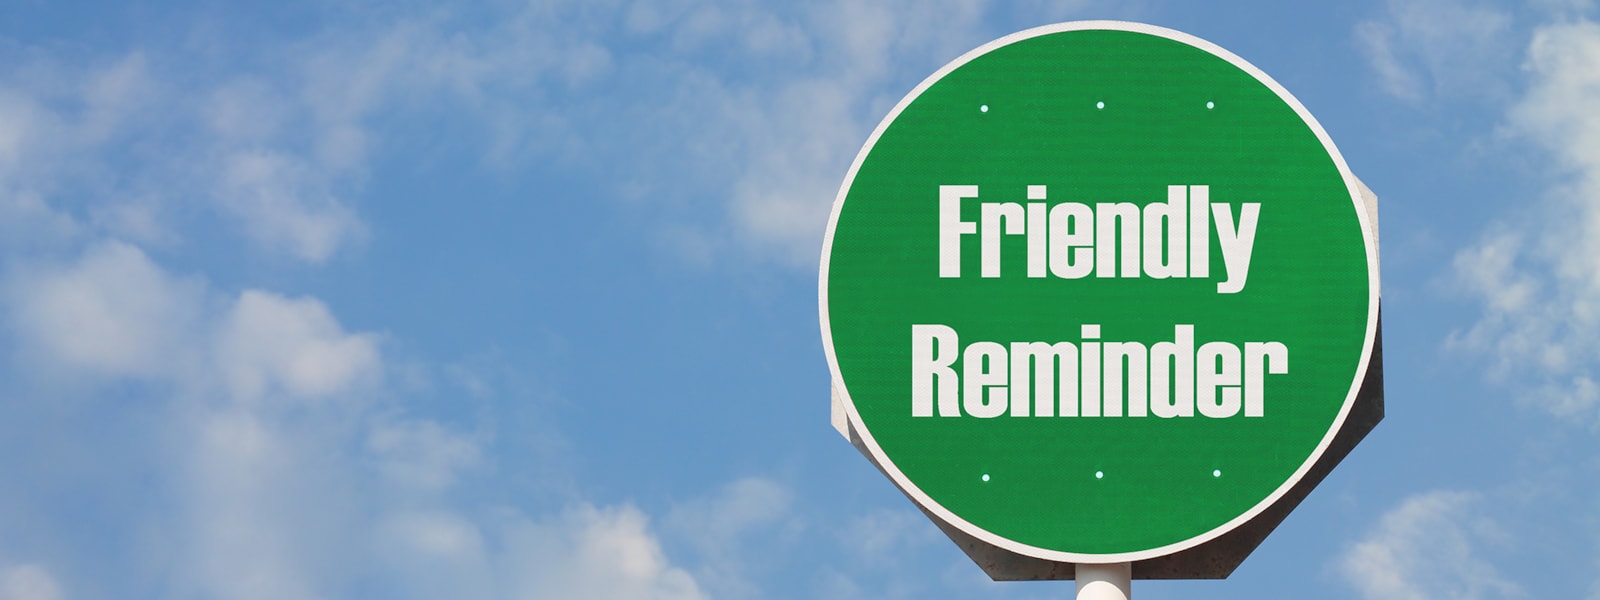 friendly reminder sign